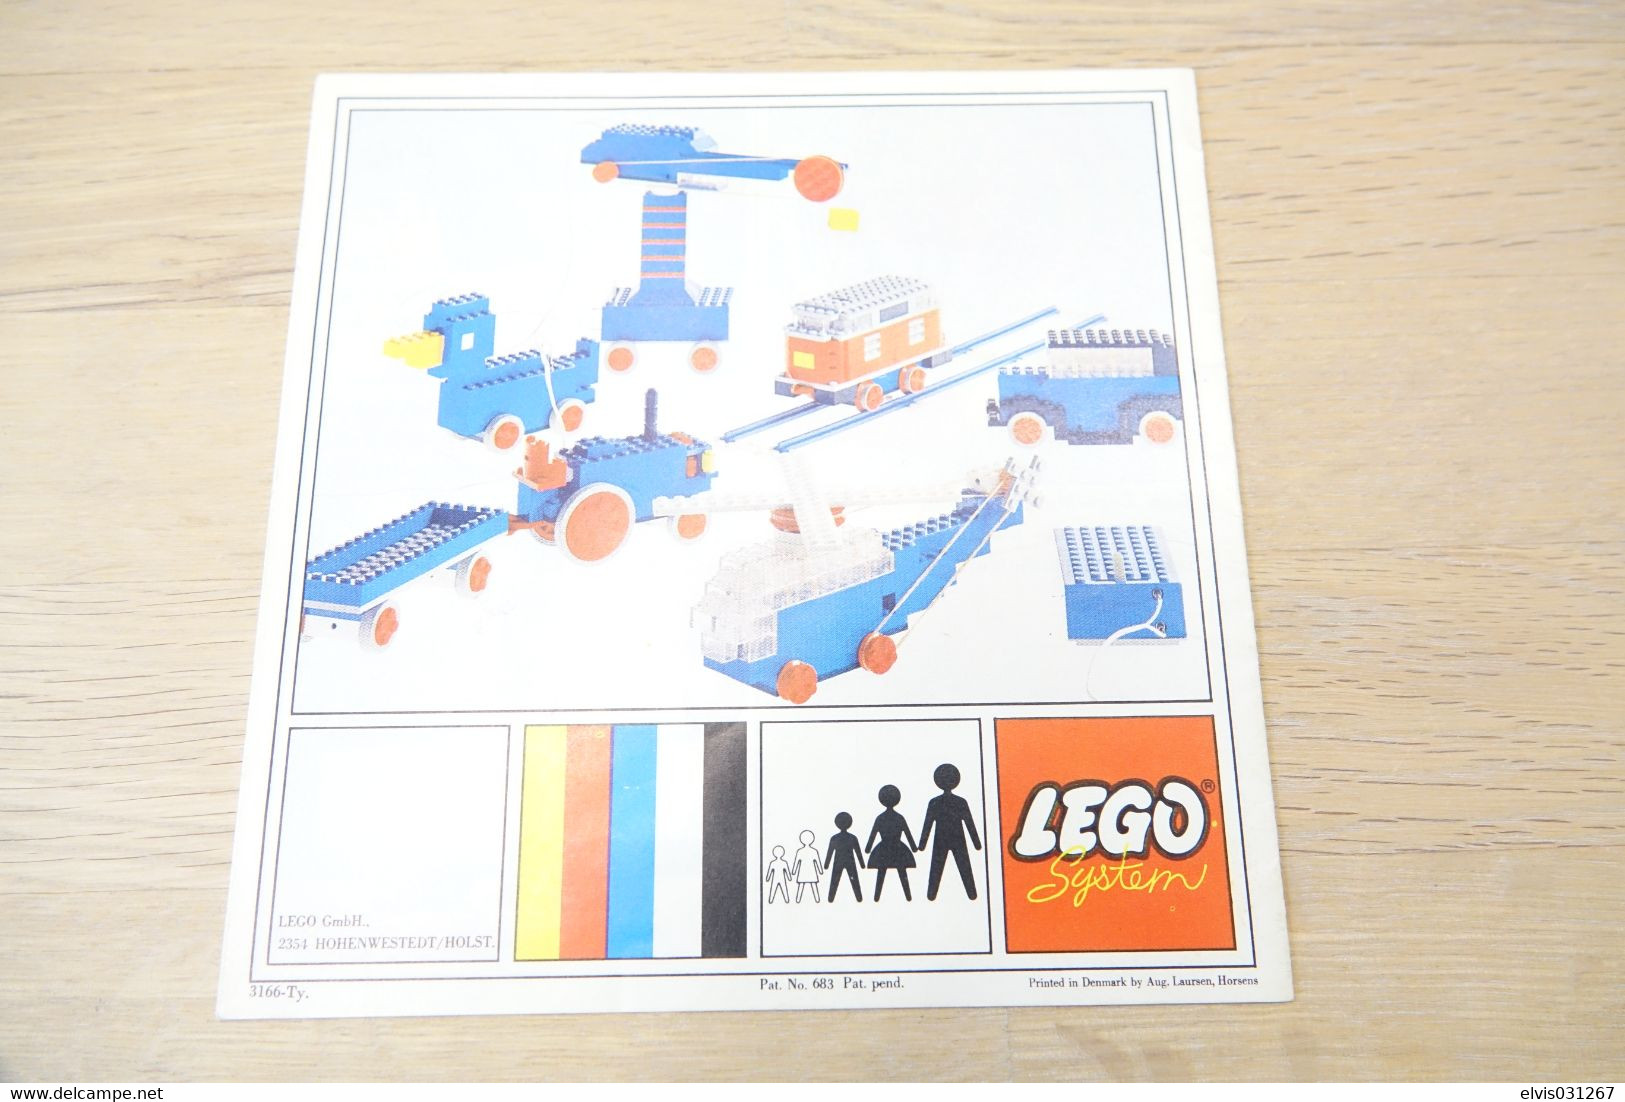 LEGO - Information Book 1966 Mit Dem Lego-Motor Bauen (3166-Ty) - Original Vintage Lego - 1966 - Catalogs